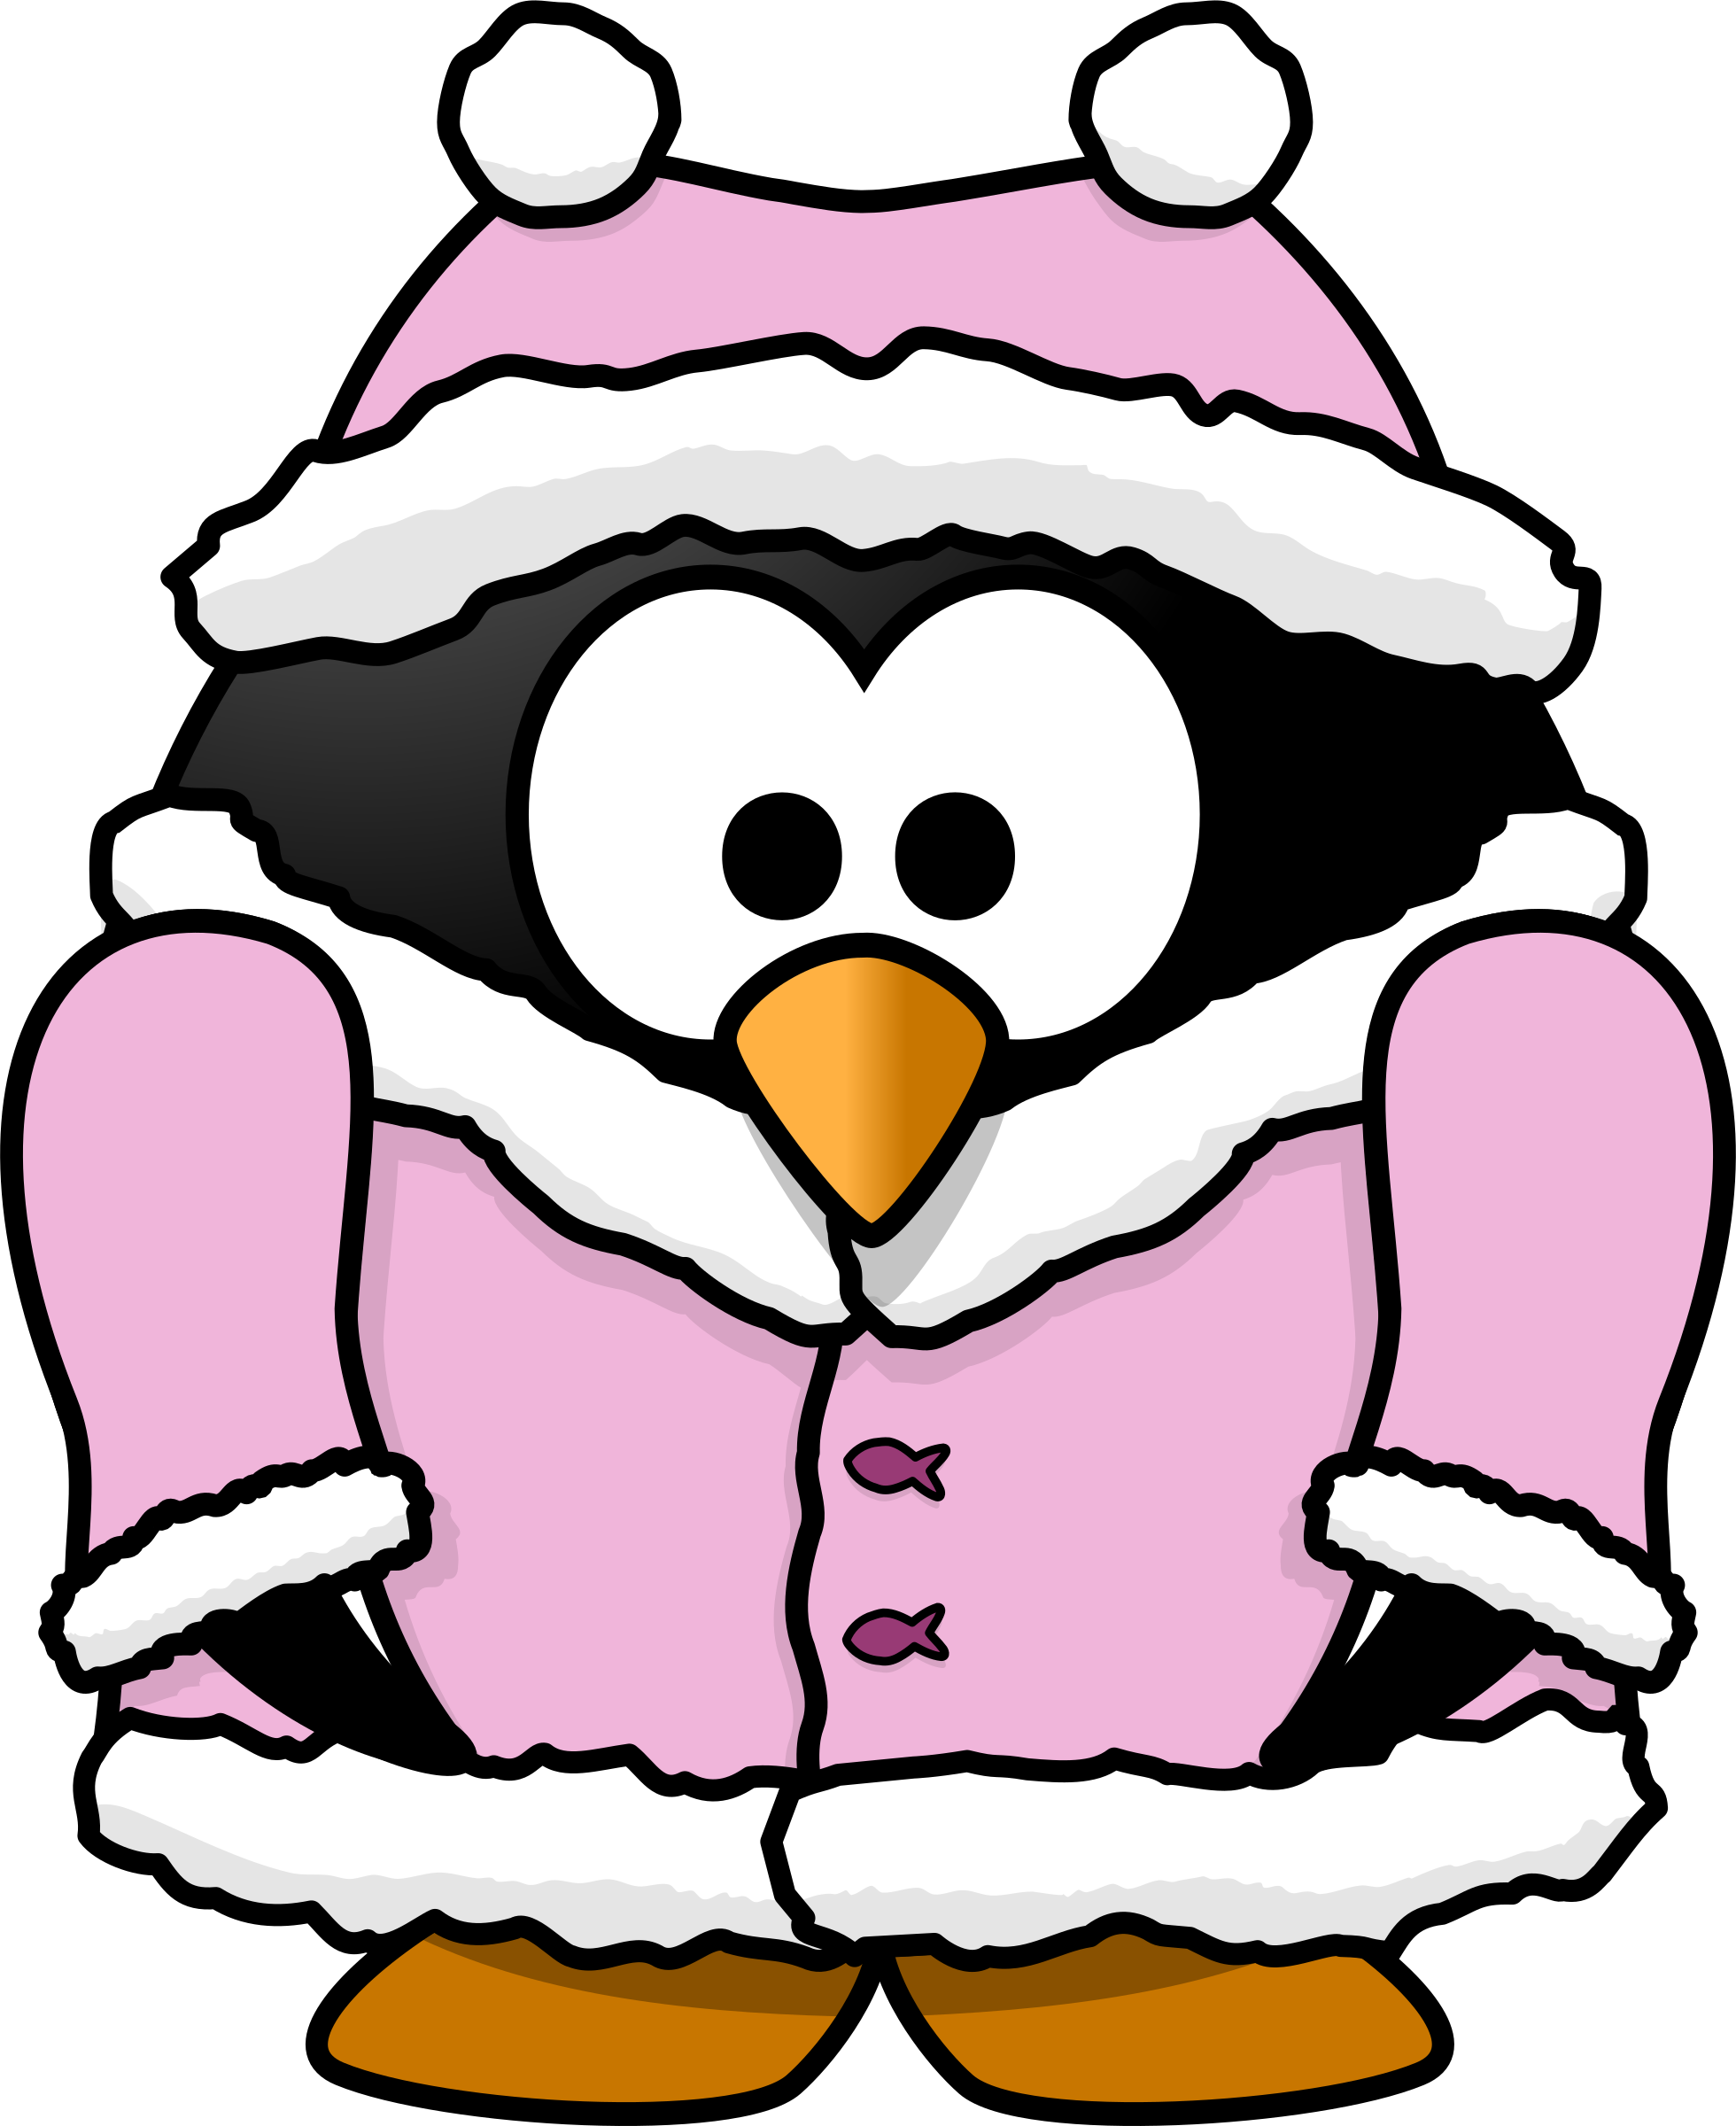 Clipart penquin jpeg. Penguin chick big image